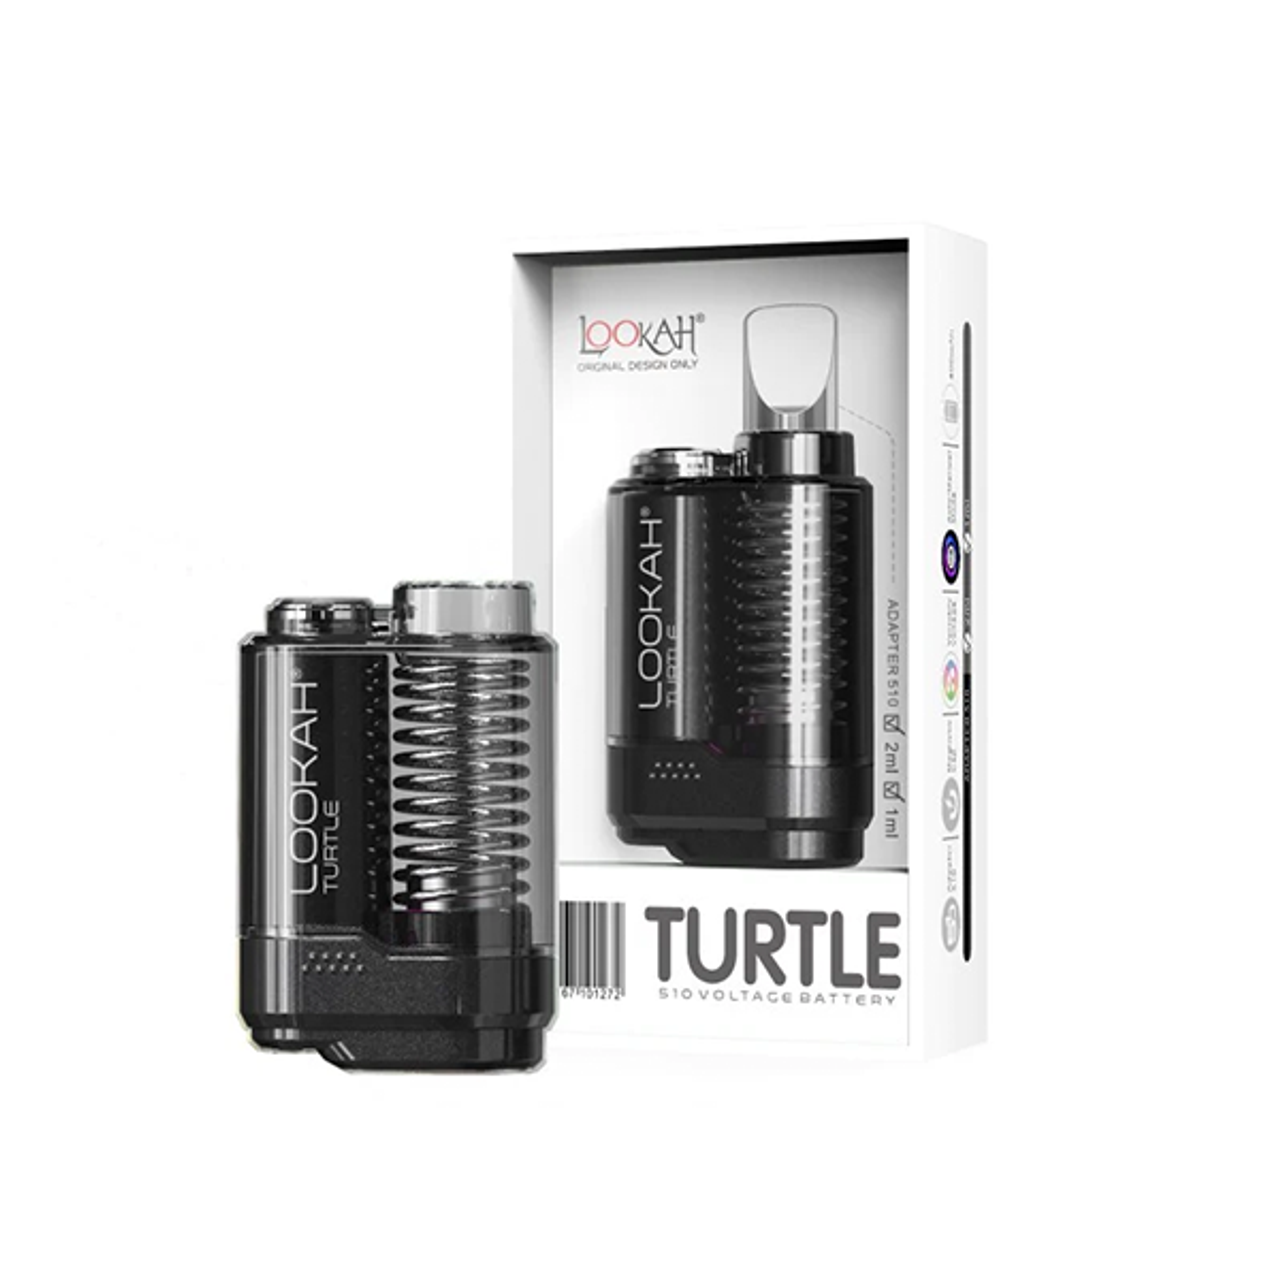 Lookah Turtle 400mAh Variable Voltage 510 Battery - Box